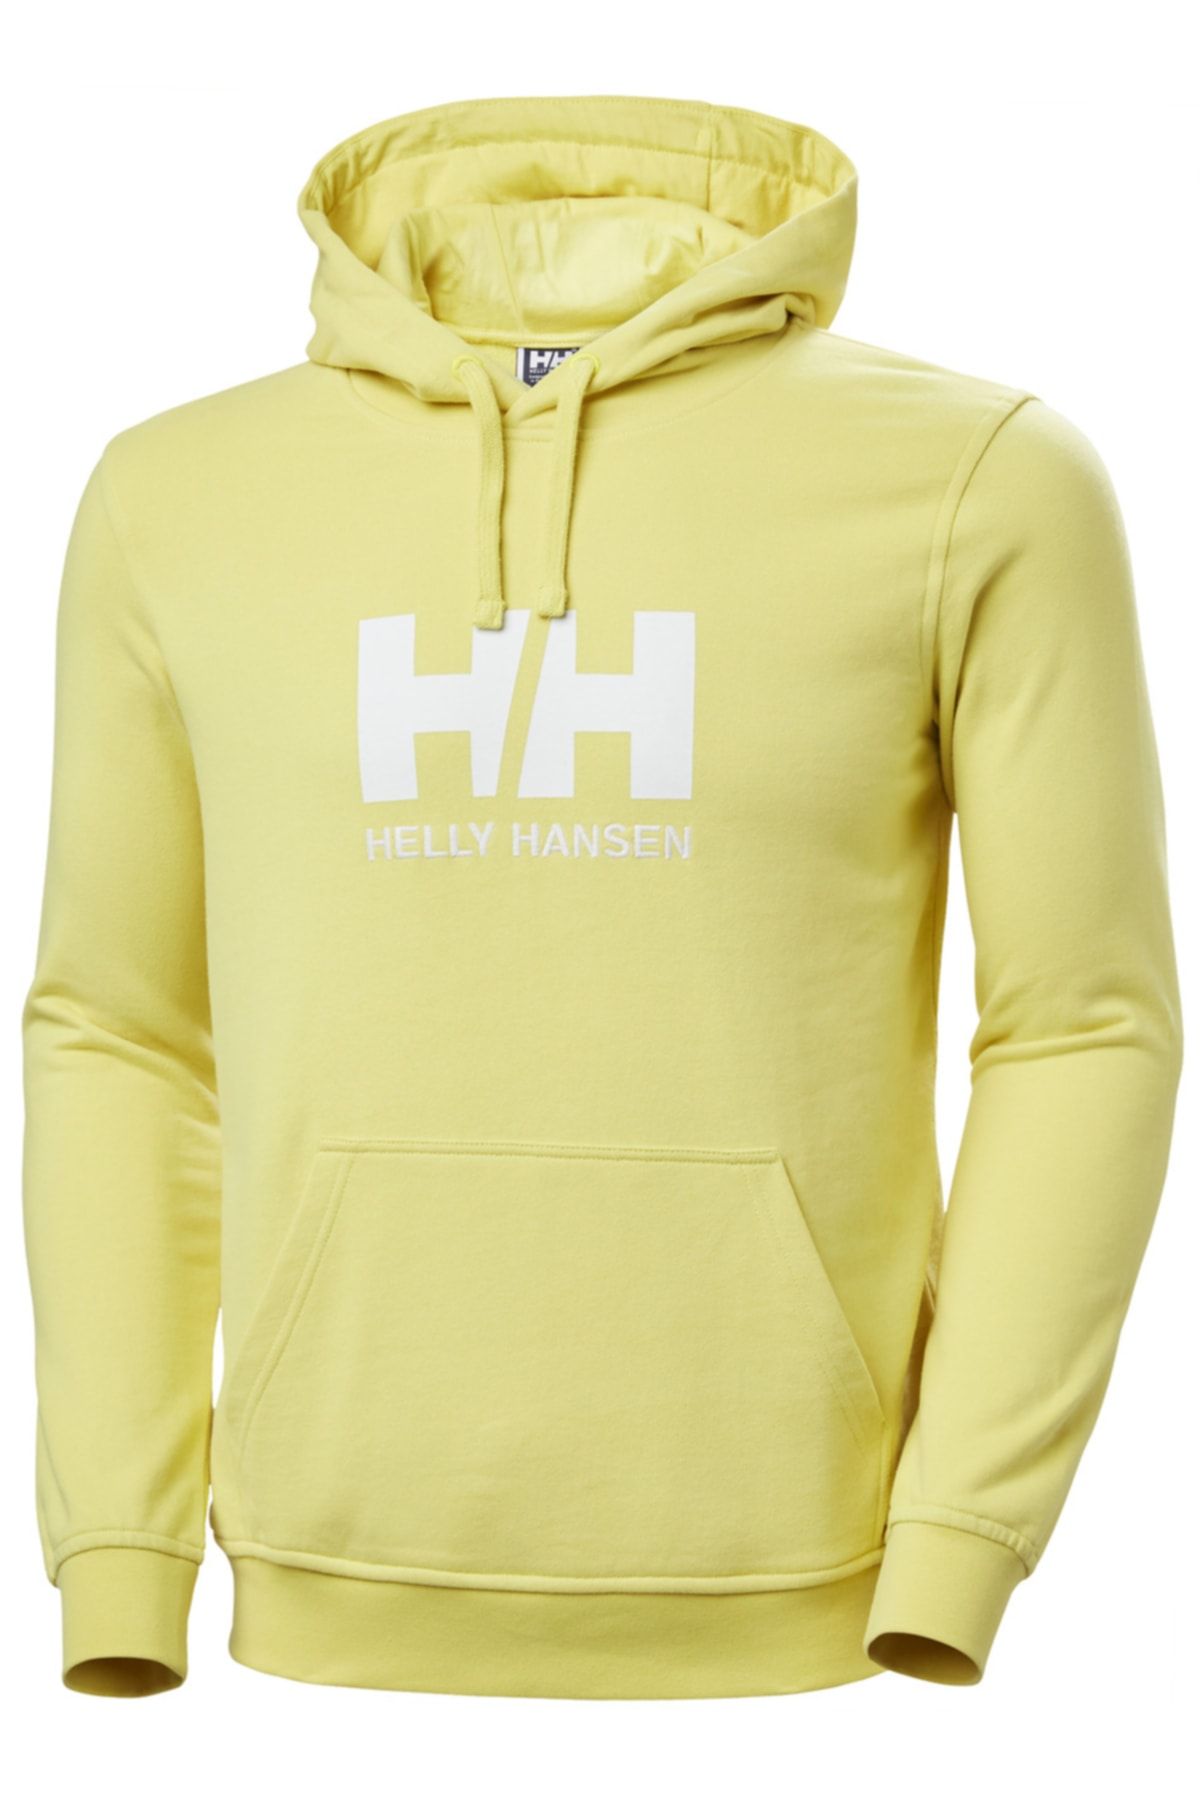 Helly Hansen Hh Logo Hoodie Erkek Sweat Shirt